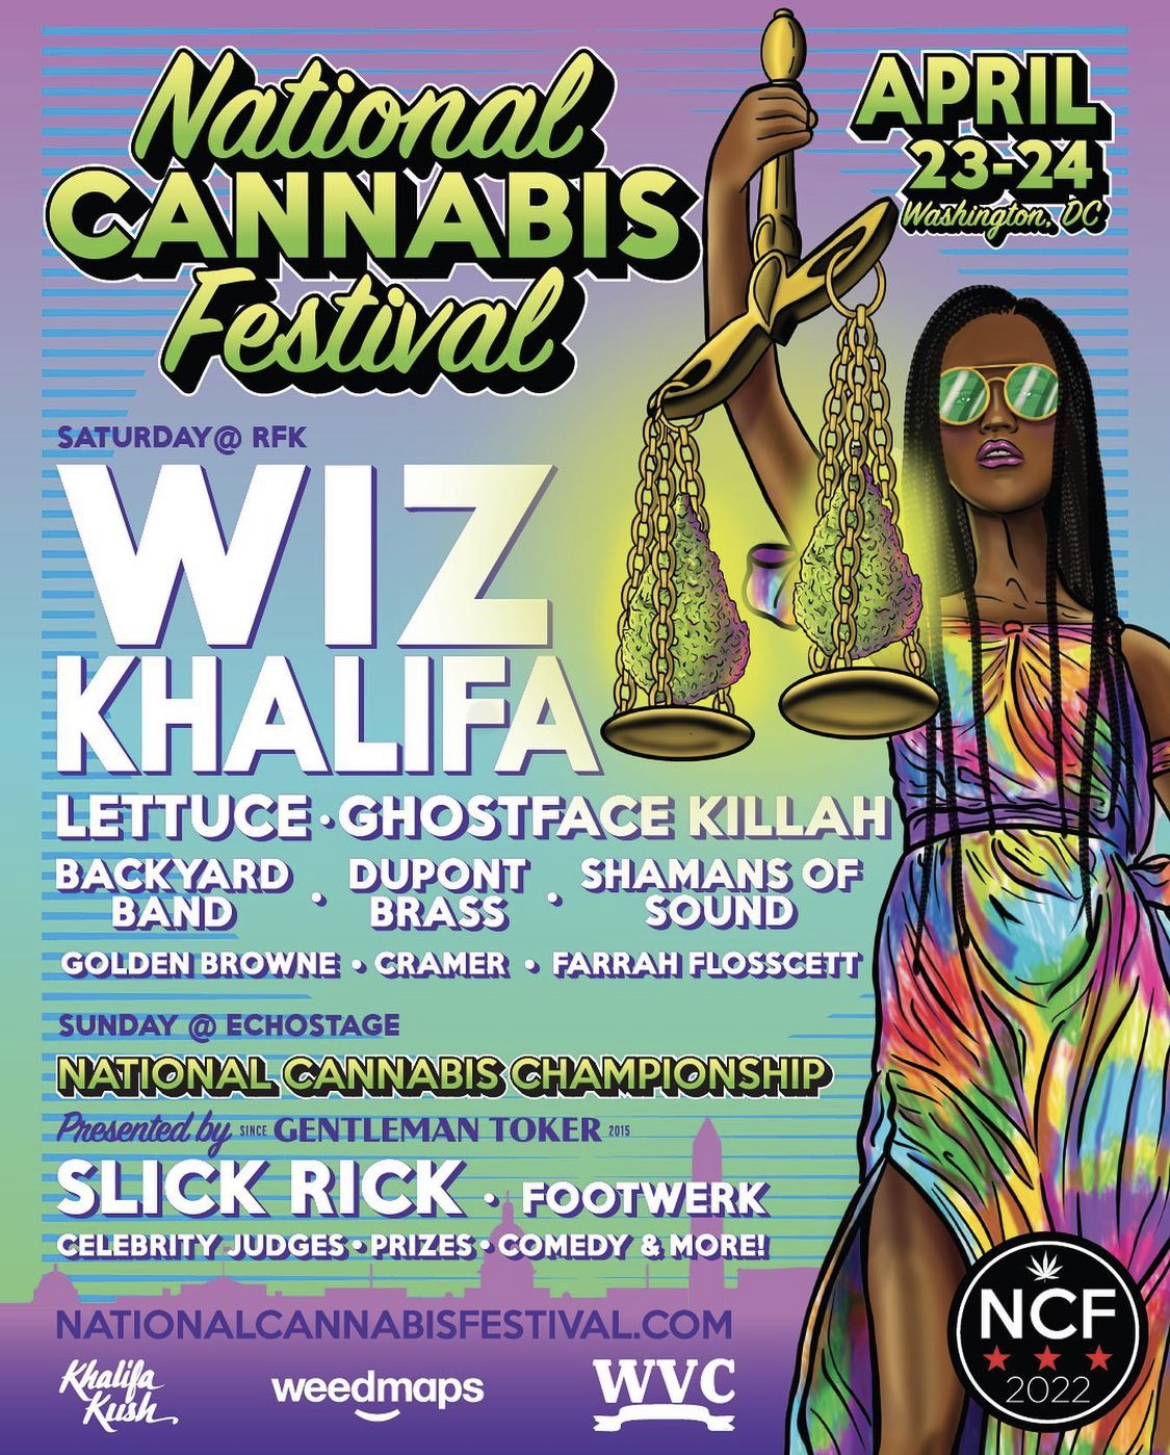 National Cannabis Festival 2022 at RFK Stadium Festival Grounds on Sat